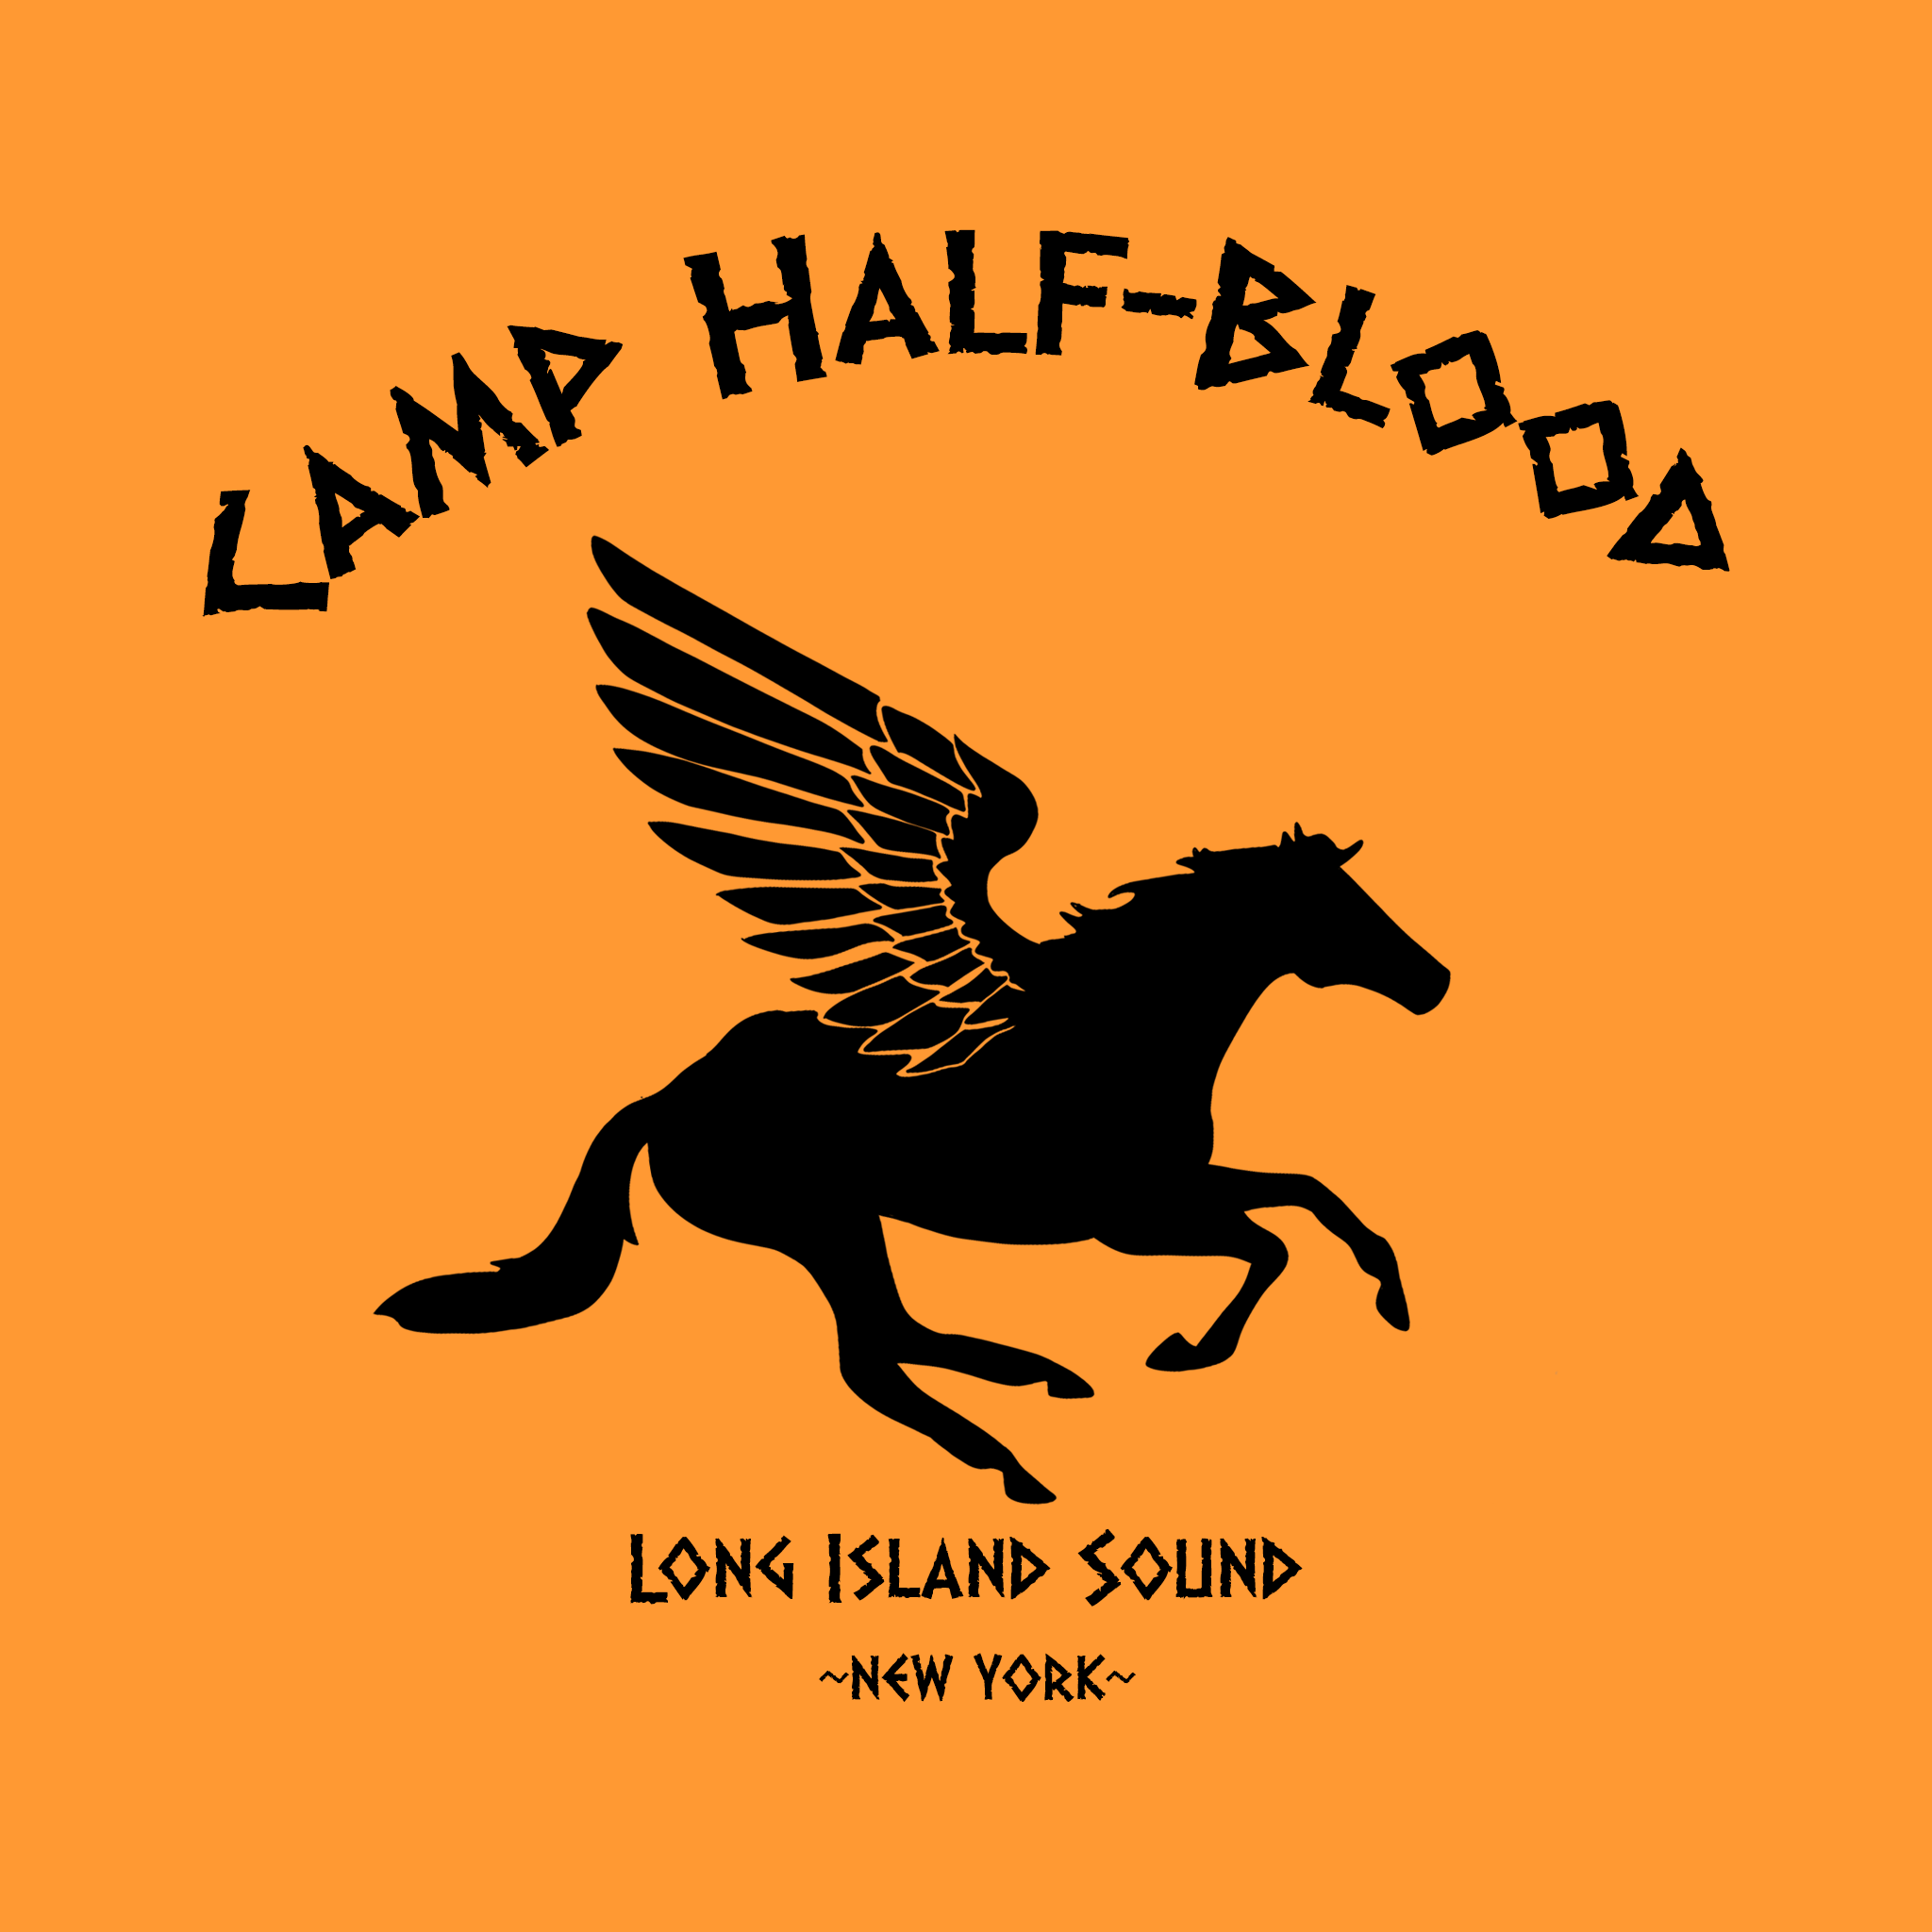  Camp Half Blood Shirt (Youth Medium, Orange